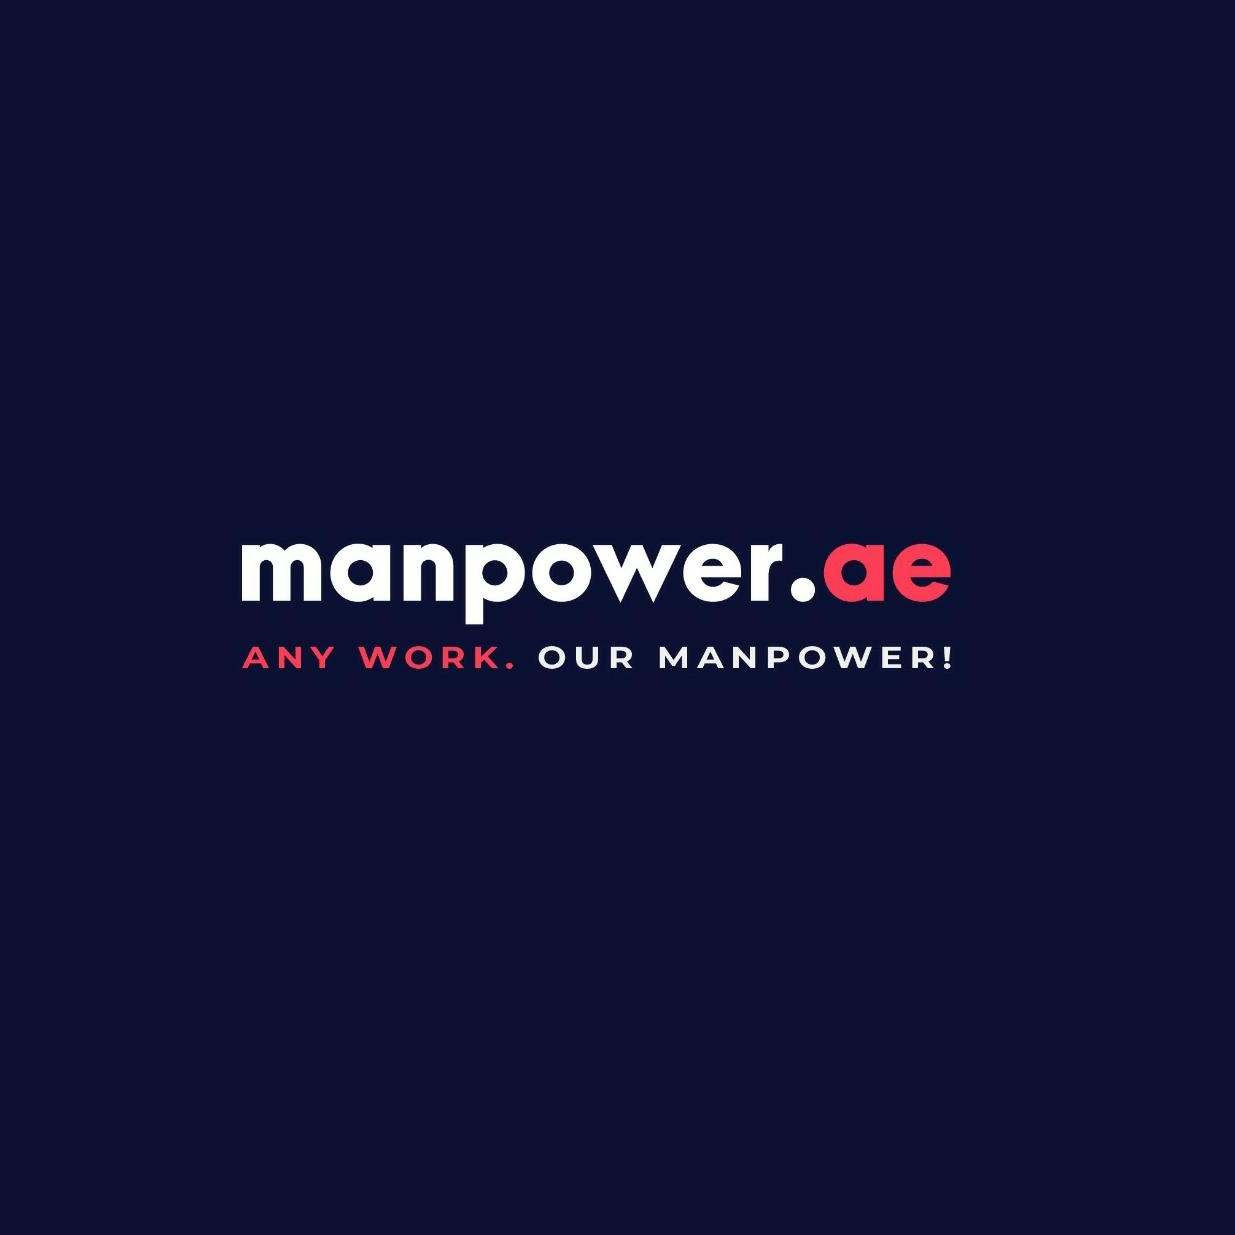 Manpower.ae logo